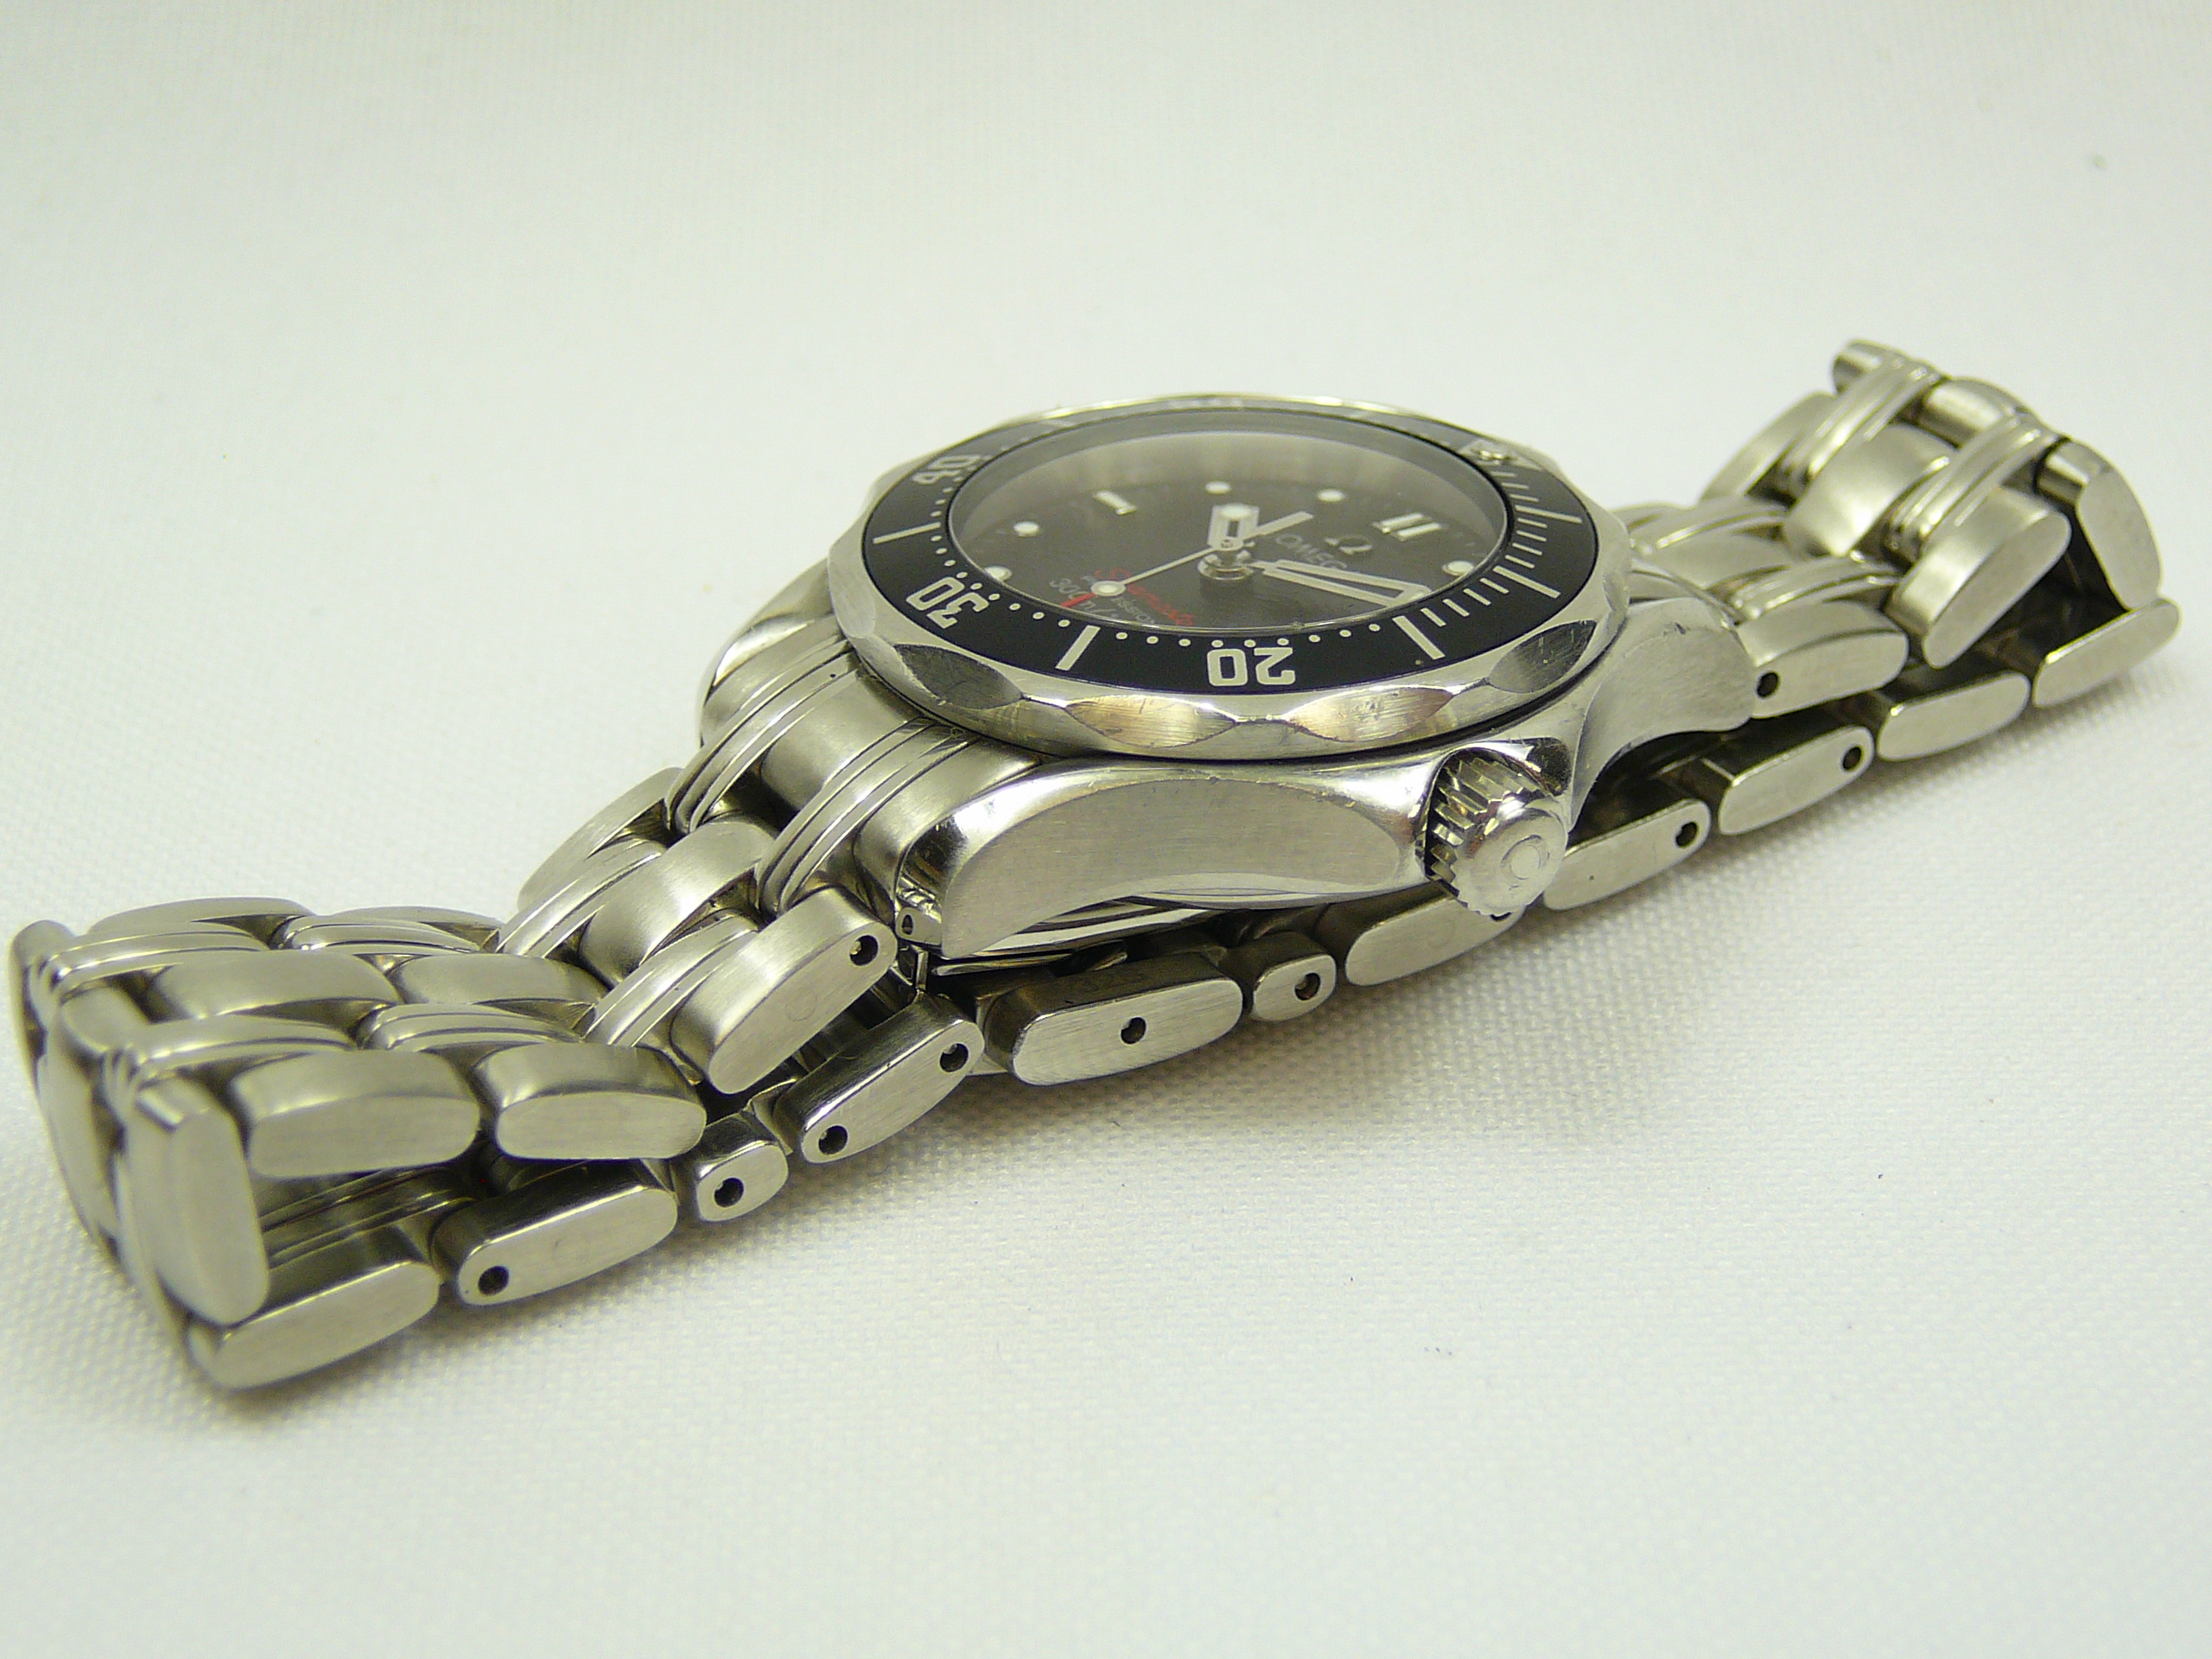 Ladies Omega Wrist Watch - Image 3 of 4